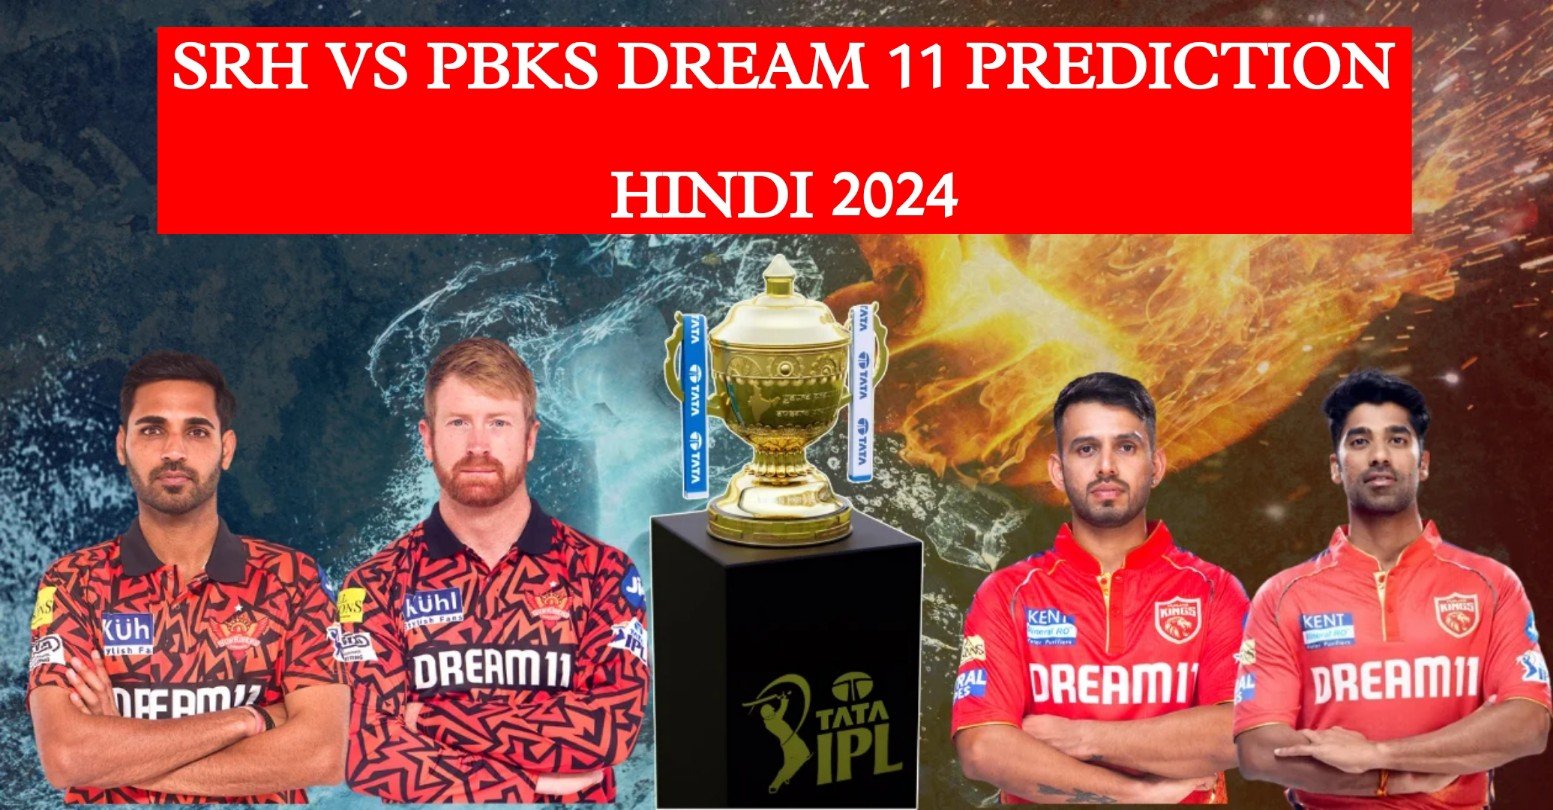 Srh Vs Pbks Dream 11 Prediction